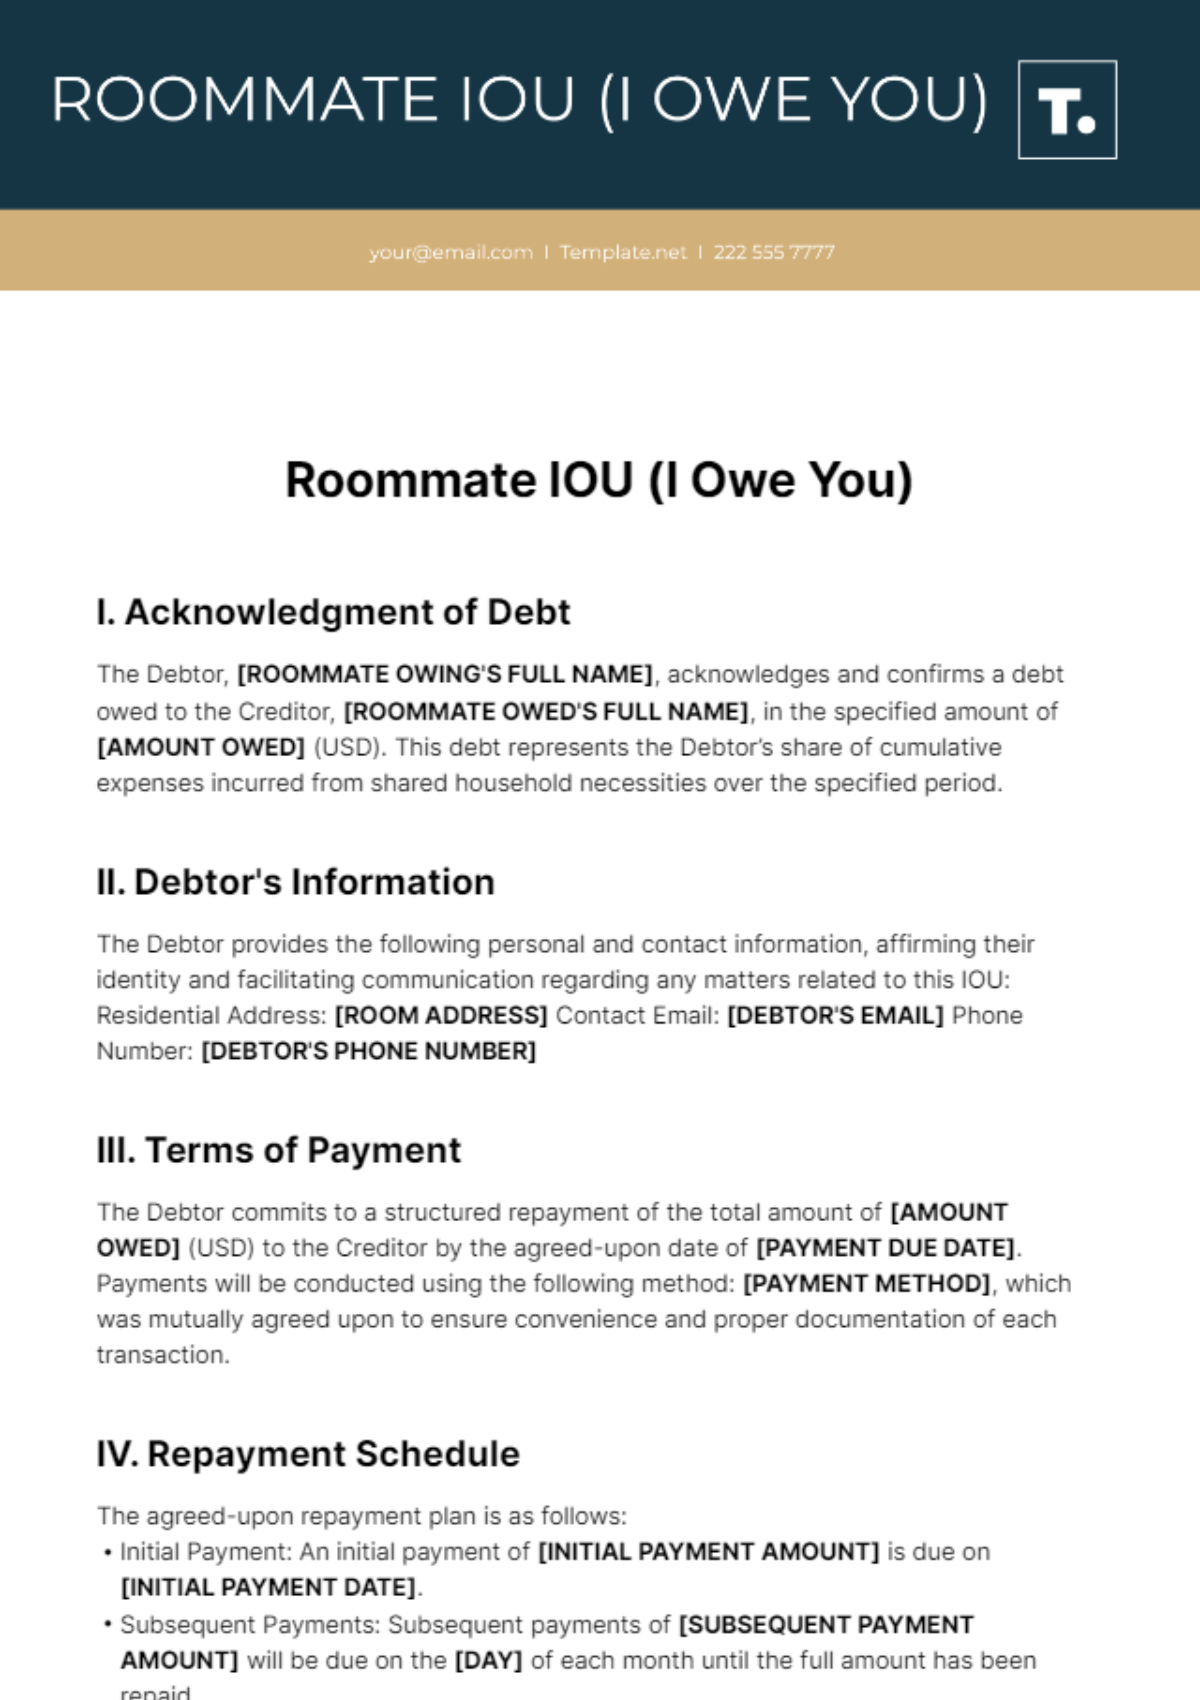 Roommate IOU Template